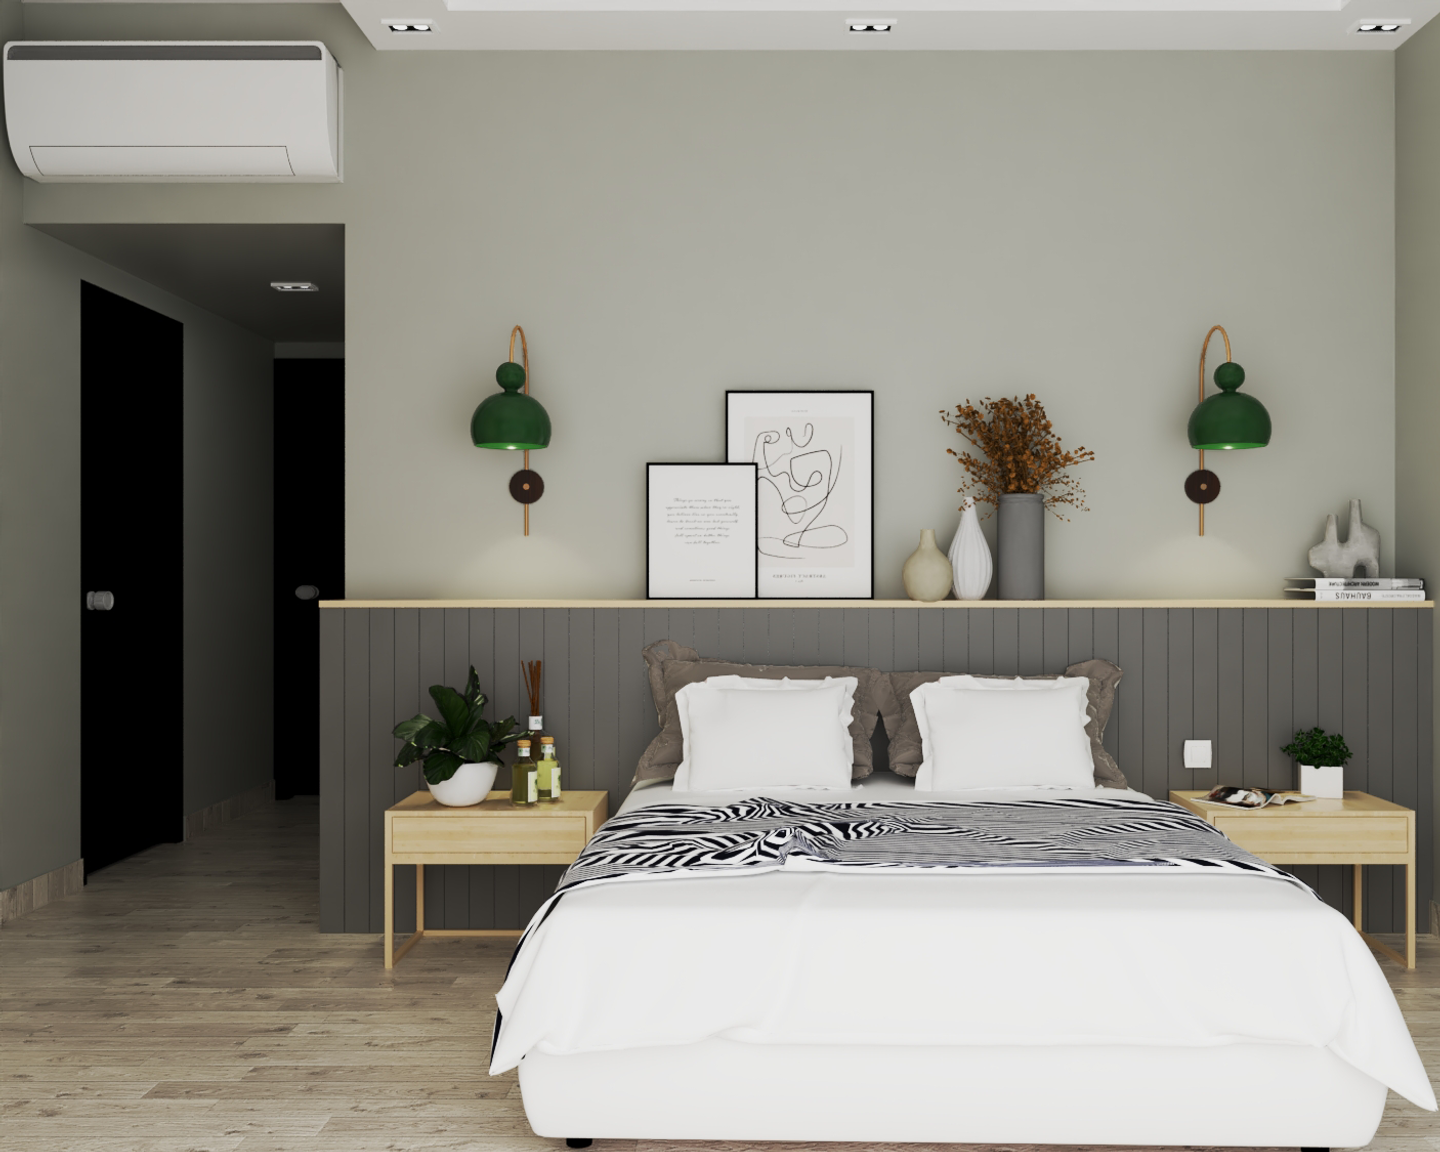 Modern Master Bedroom Interior Design with Storage Space - Livspace